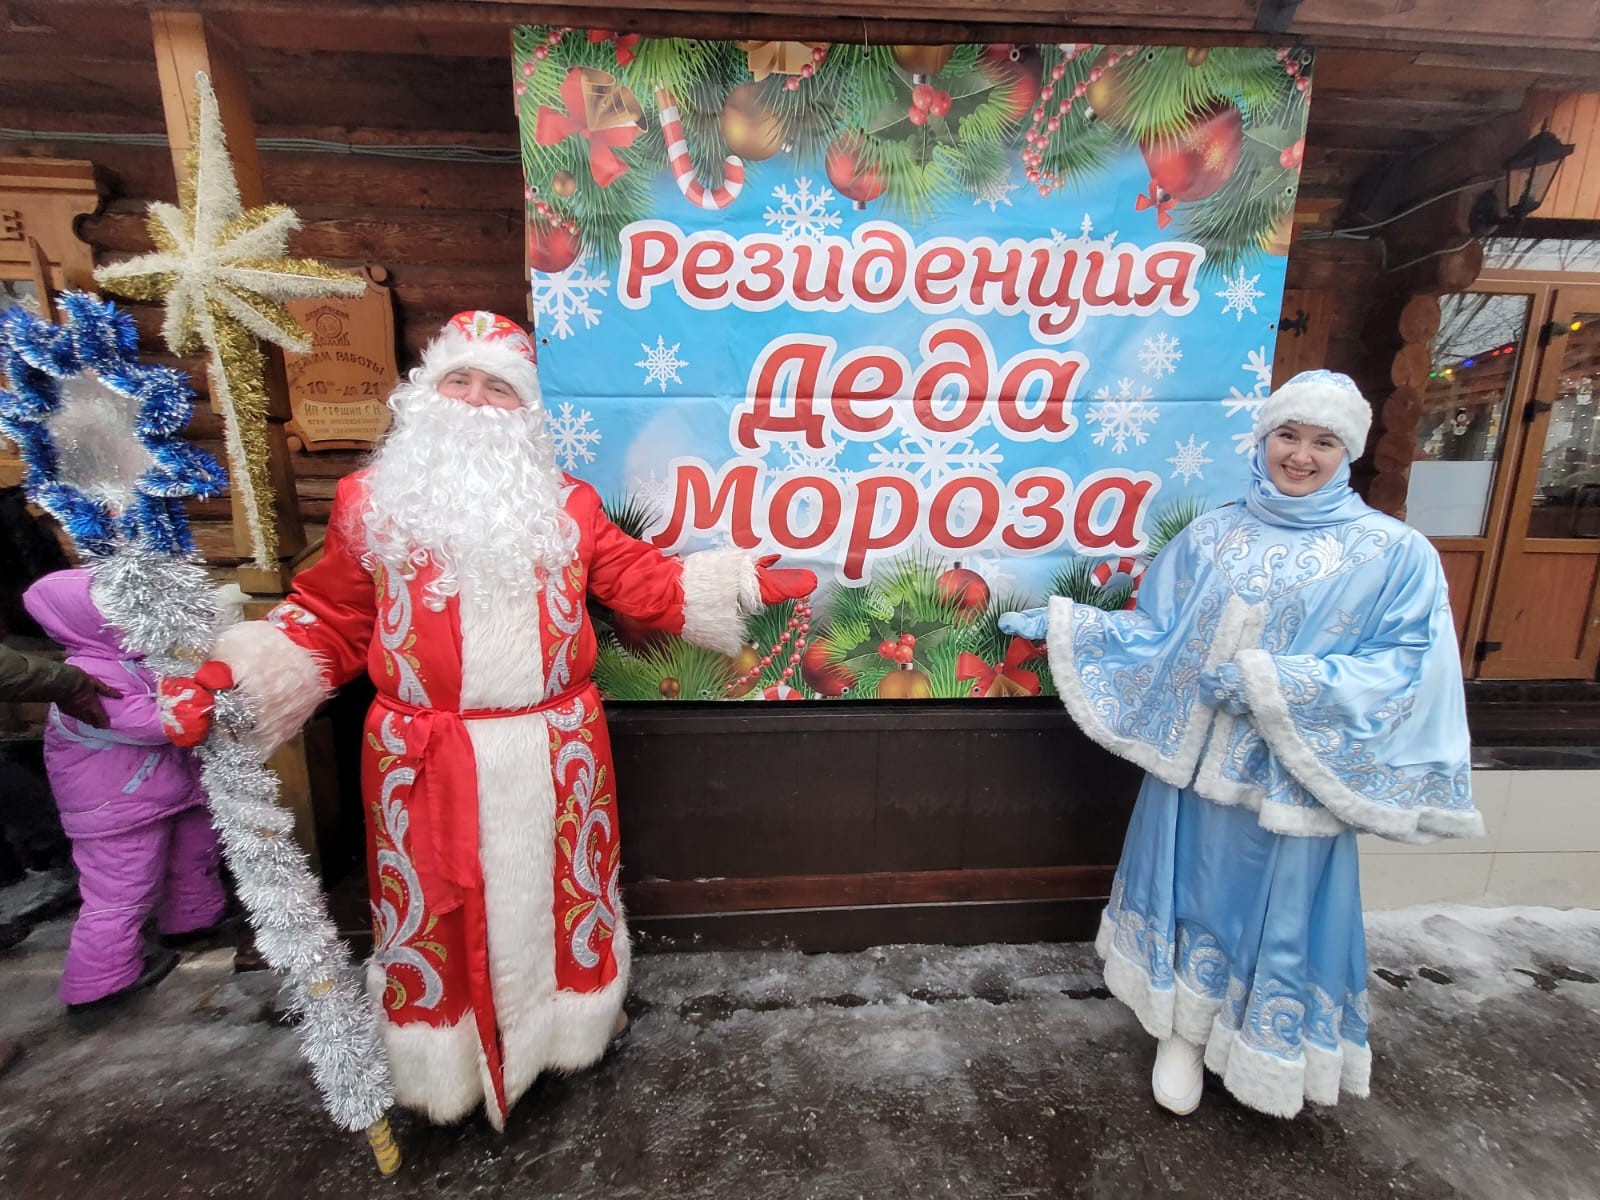 В Саранске открылась резиденция Деда Мороза